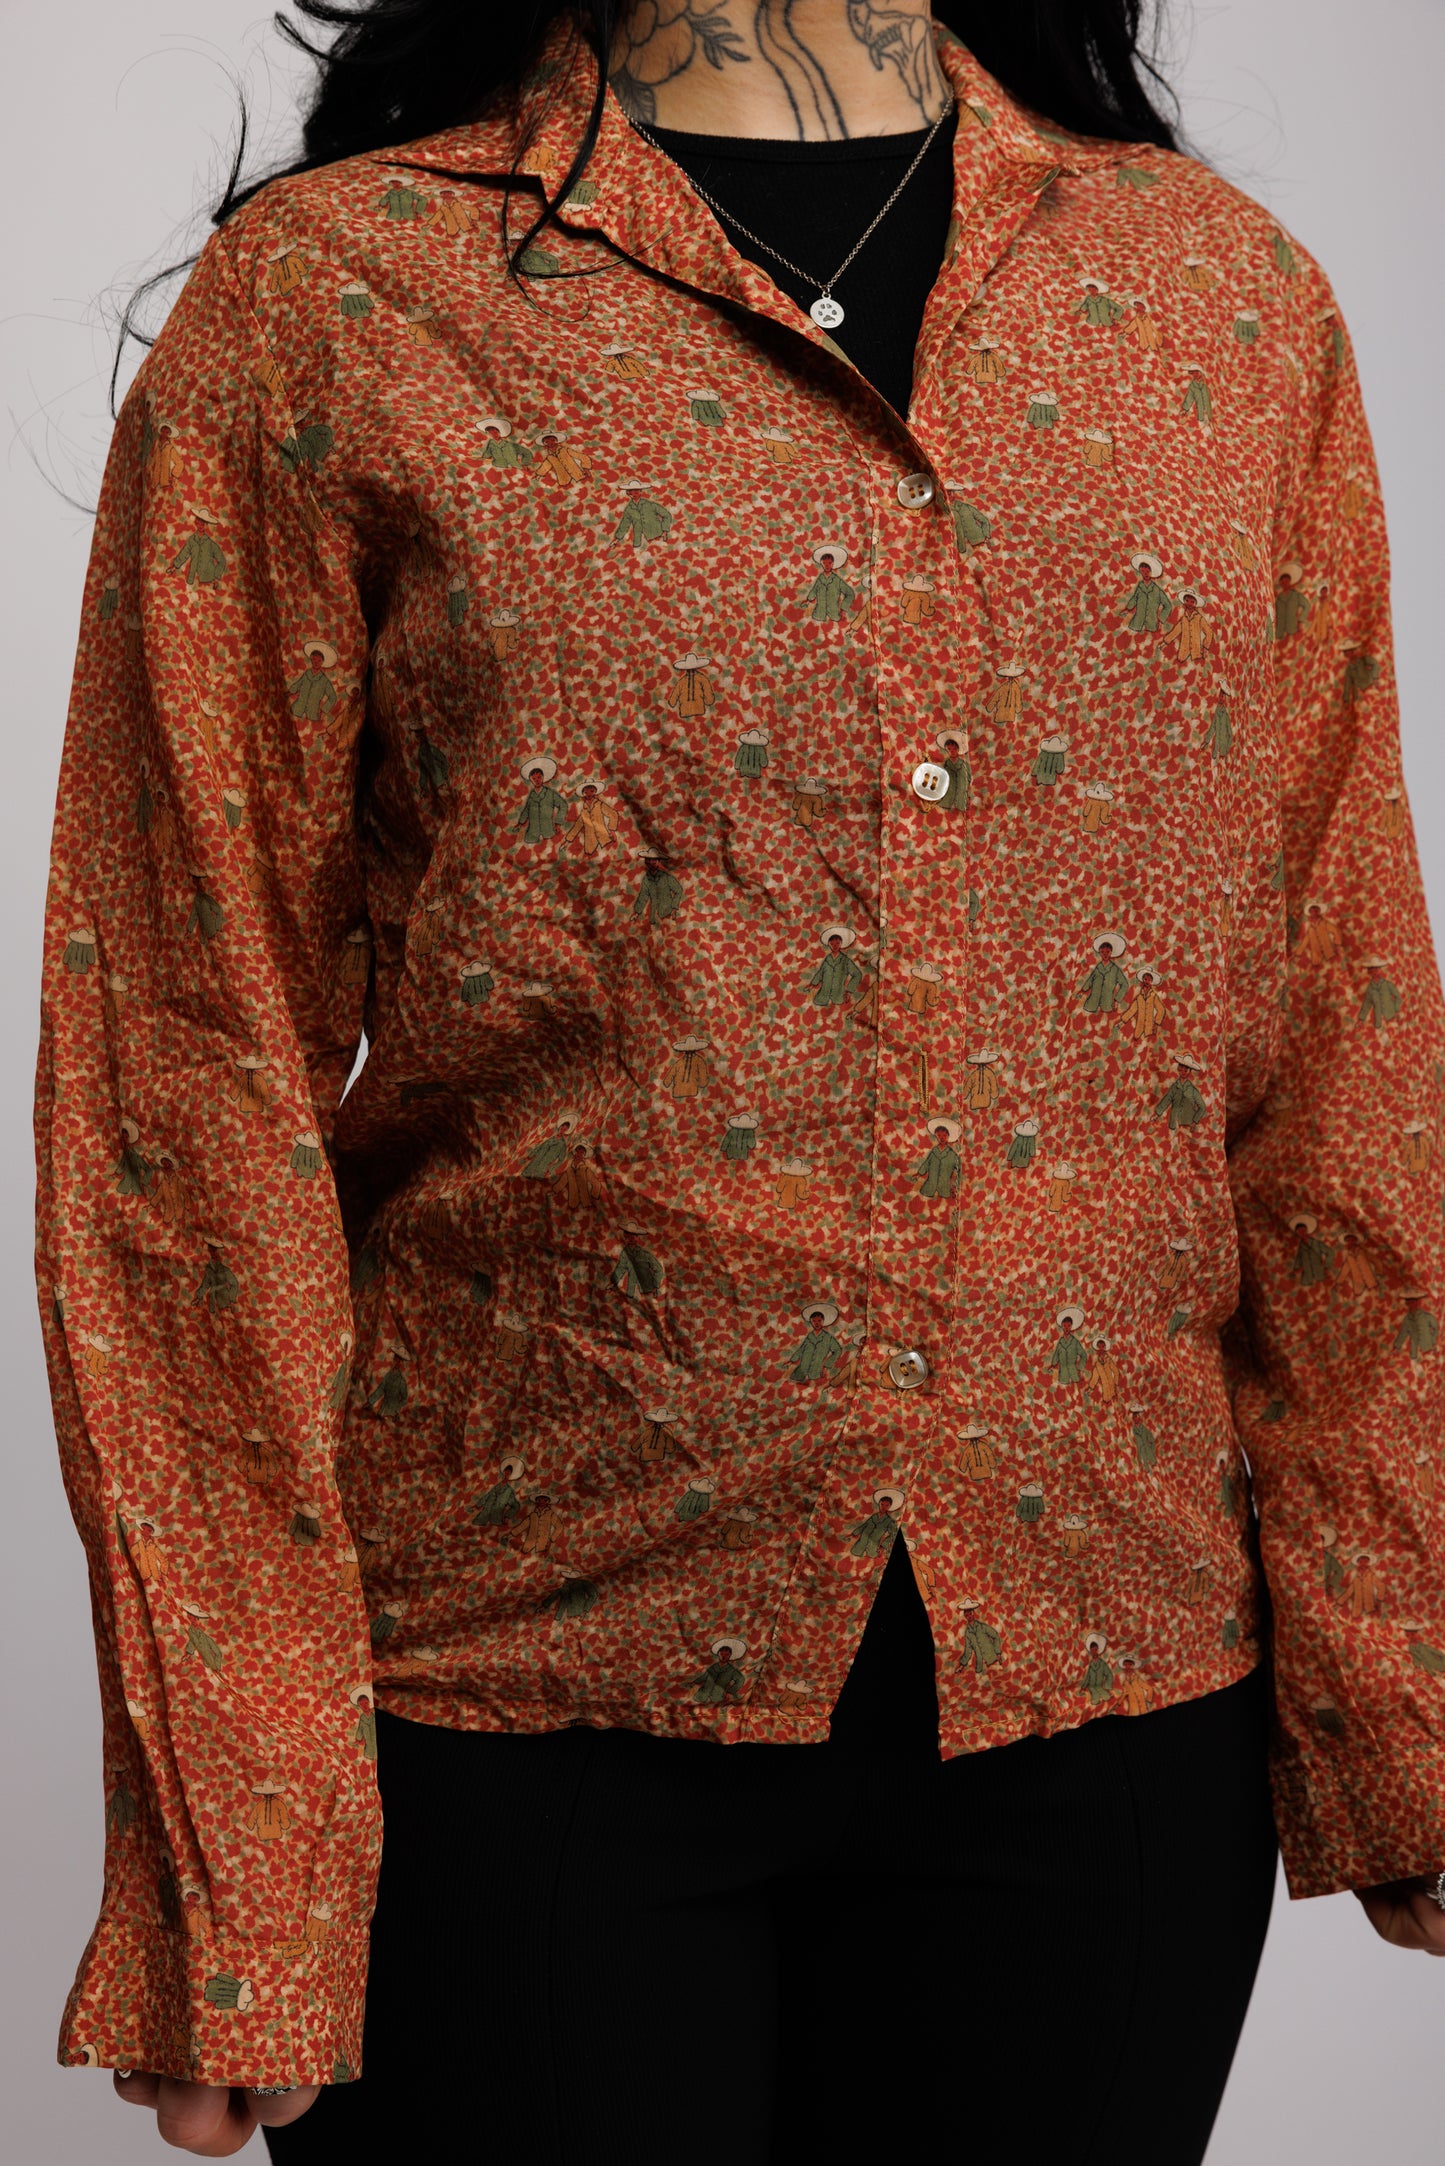 70's Sheer Patterened Shirt S/M